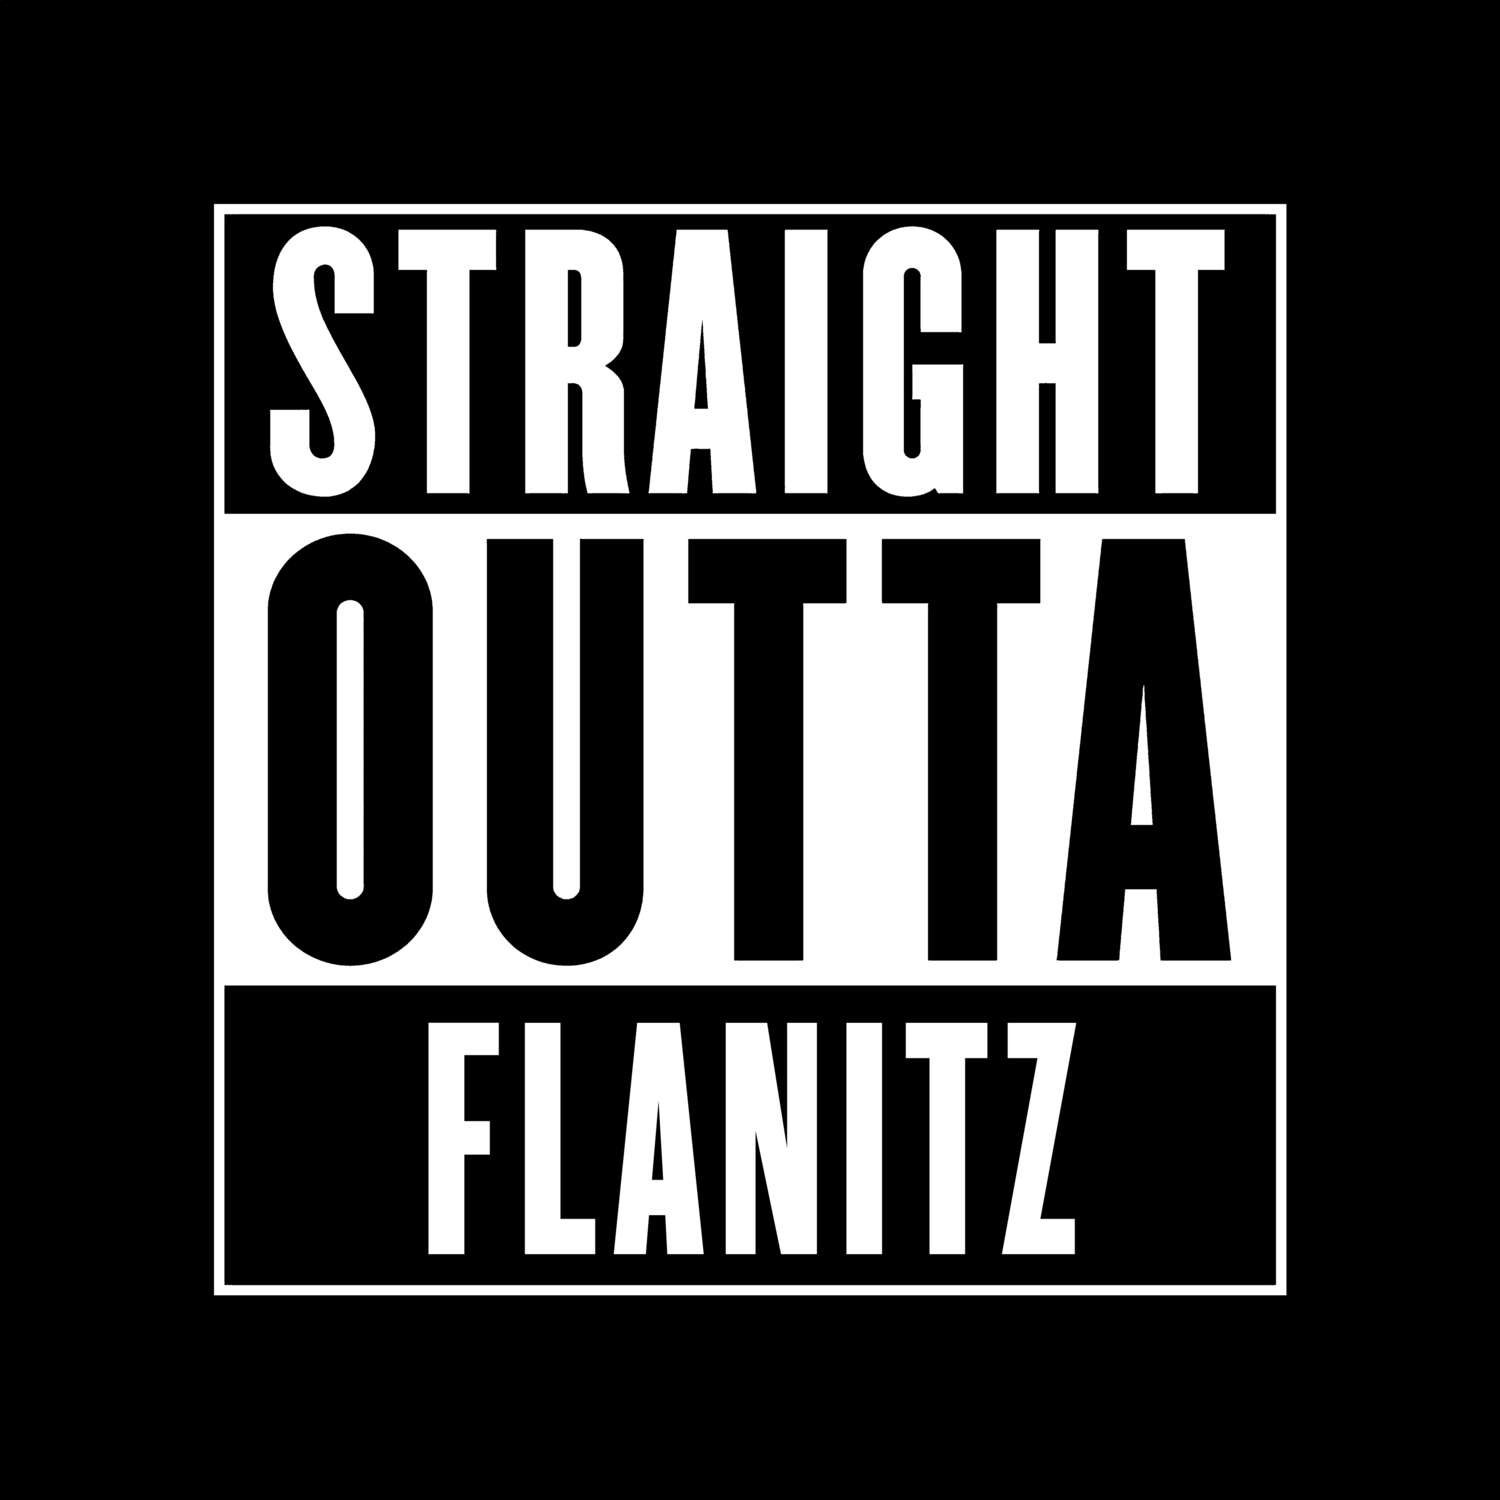 Flanitz T-Shirt »Straight Outta«